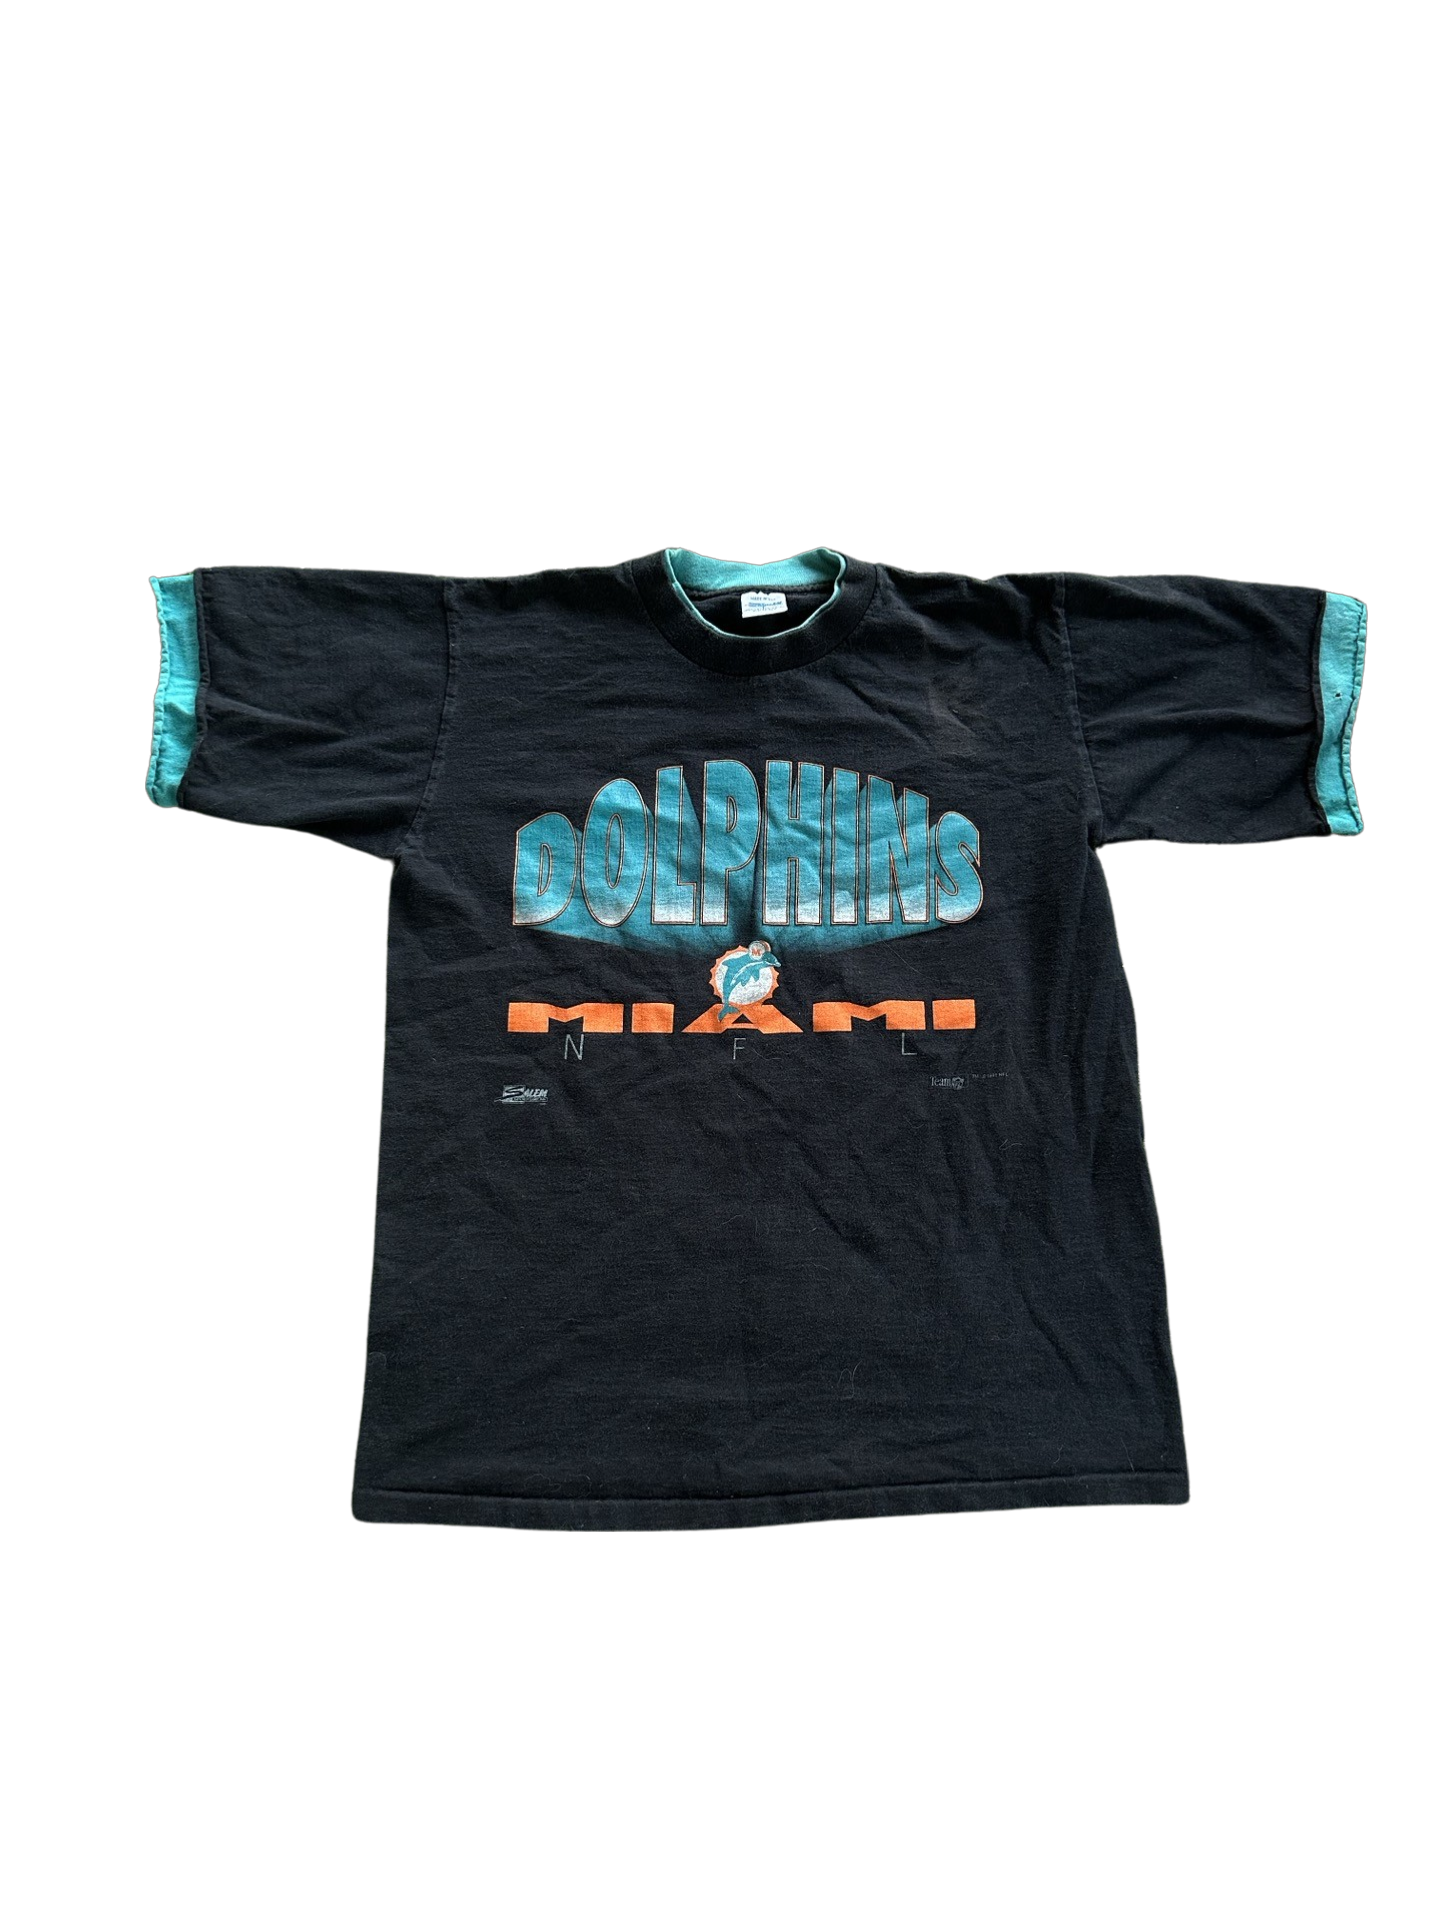 Vintage 1991 Miami Dolphins T-shirt